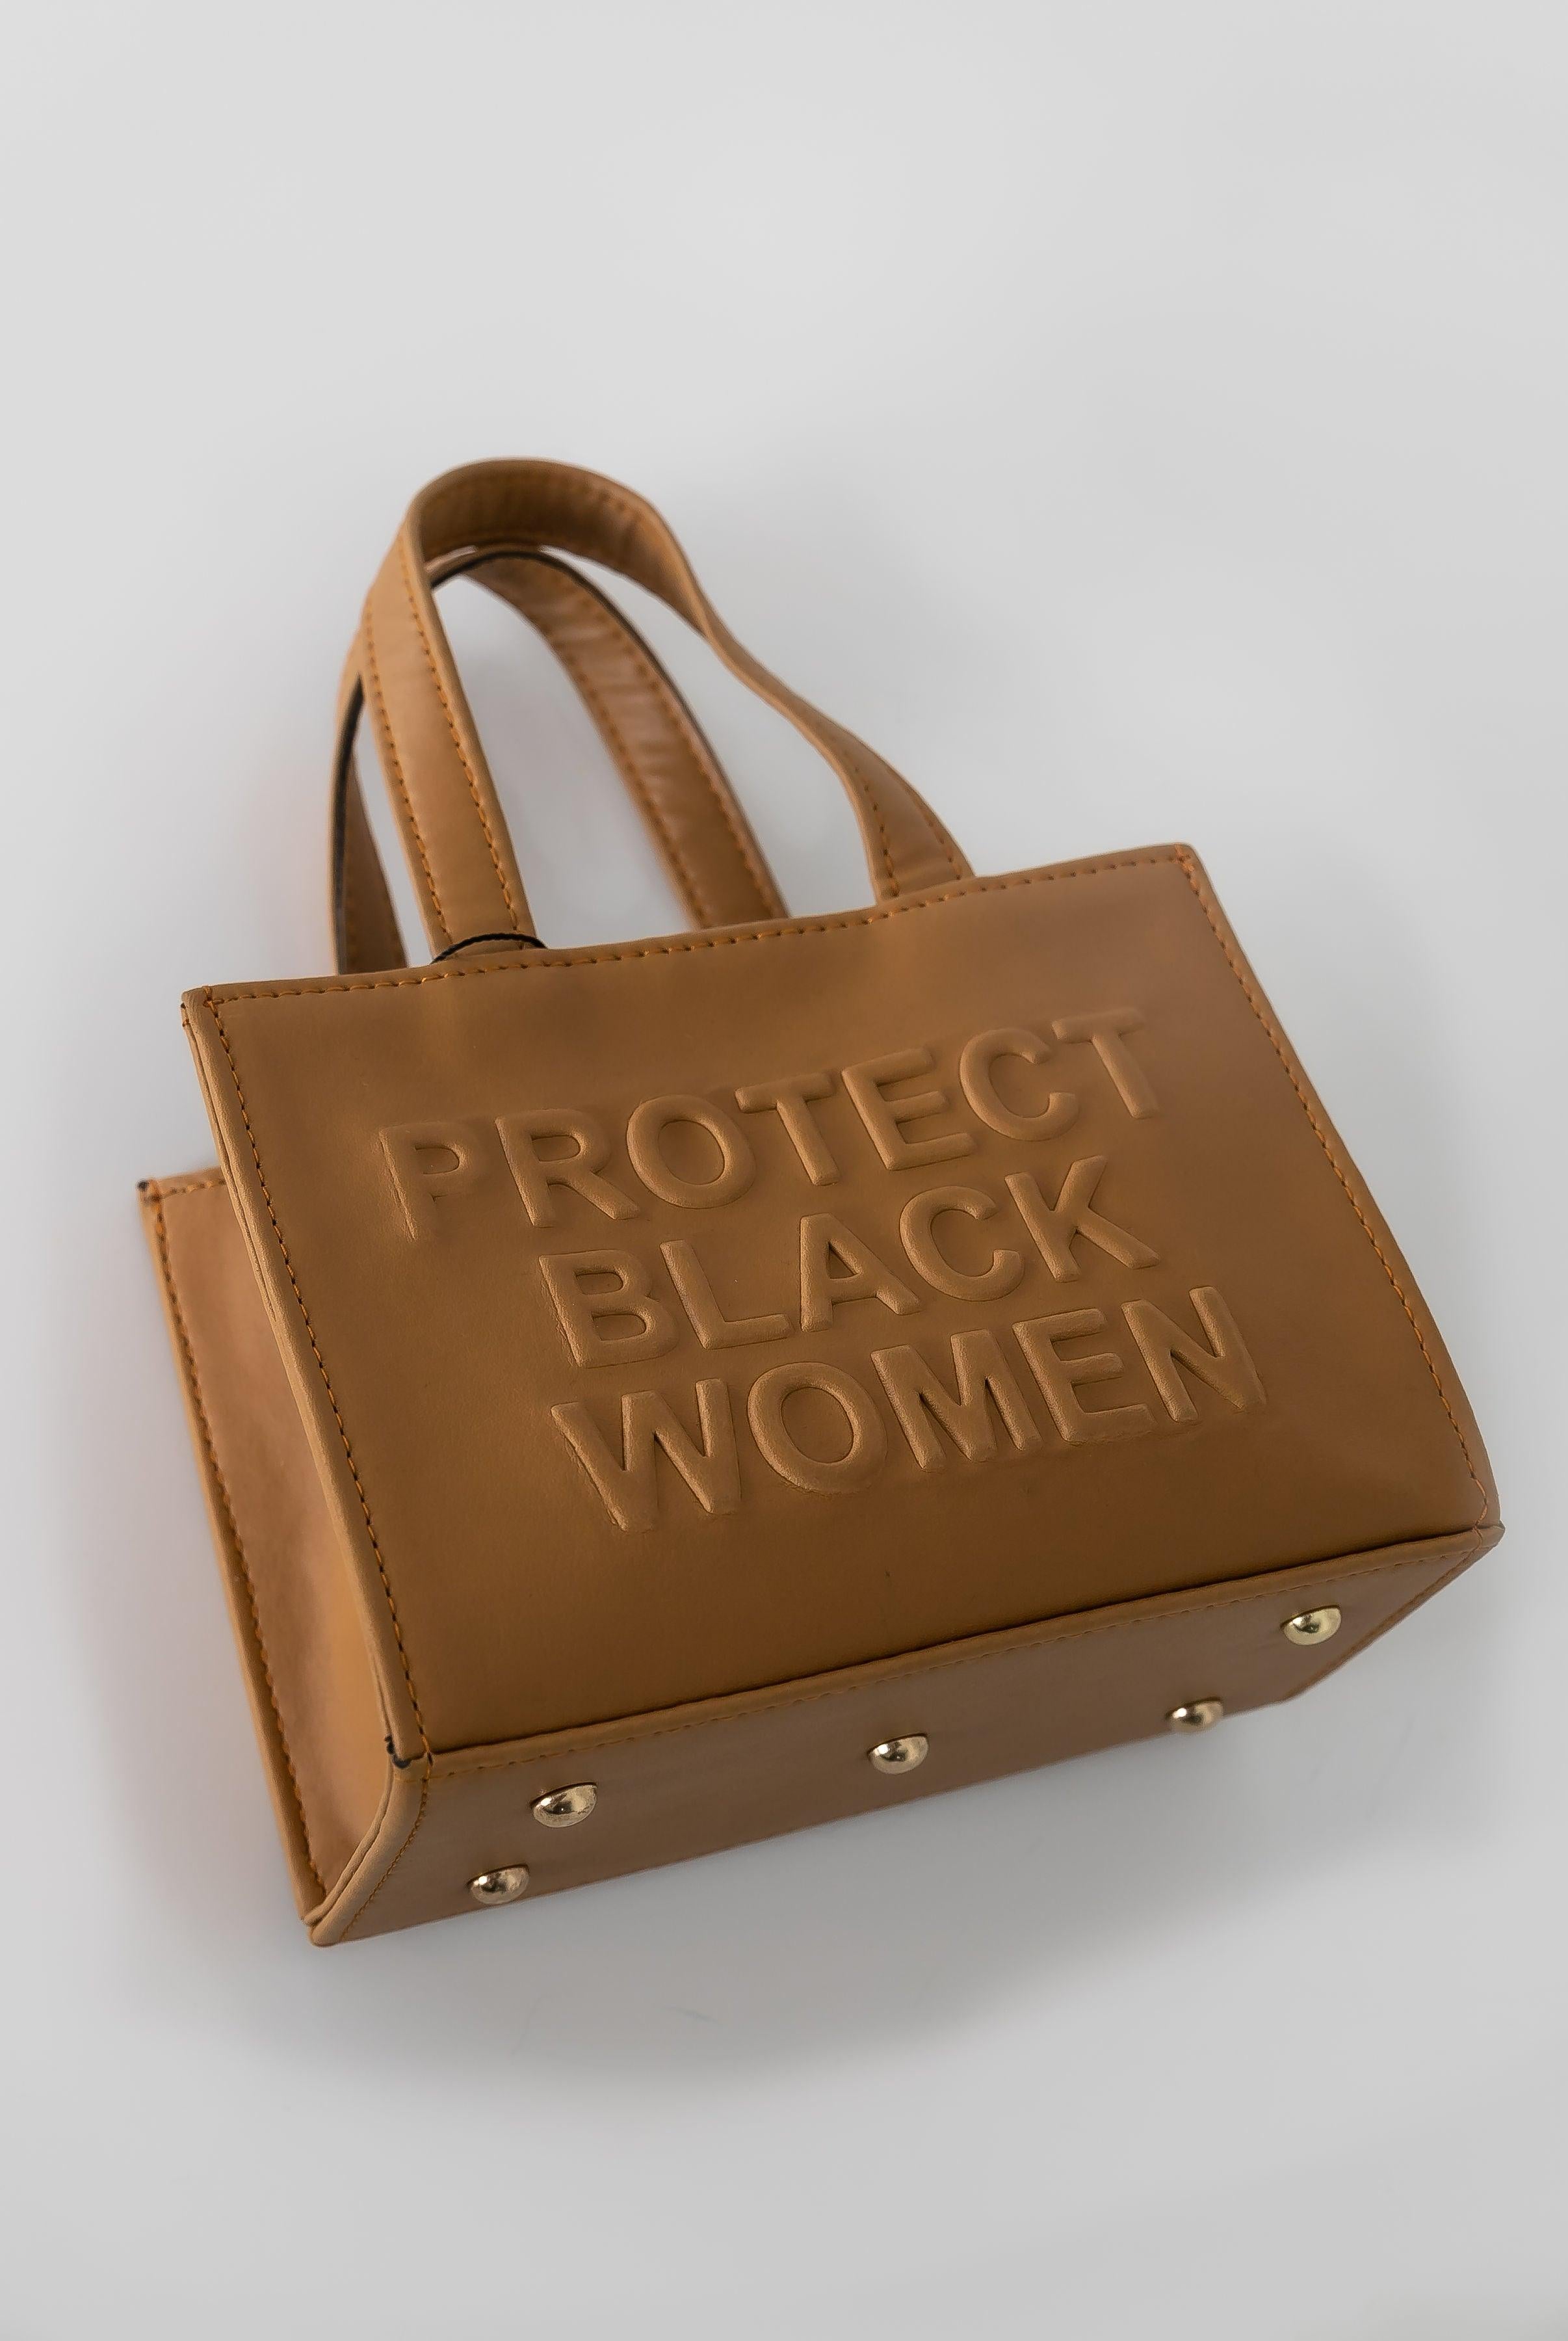 Protect Black People Caramel Mini Bag